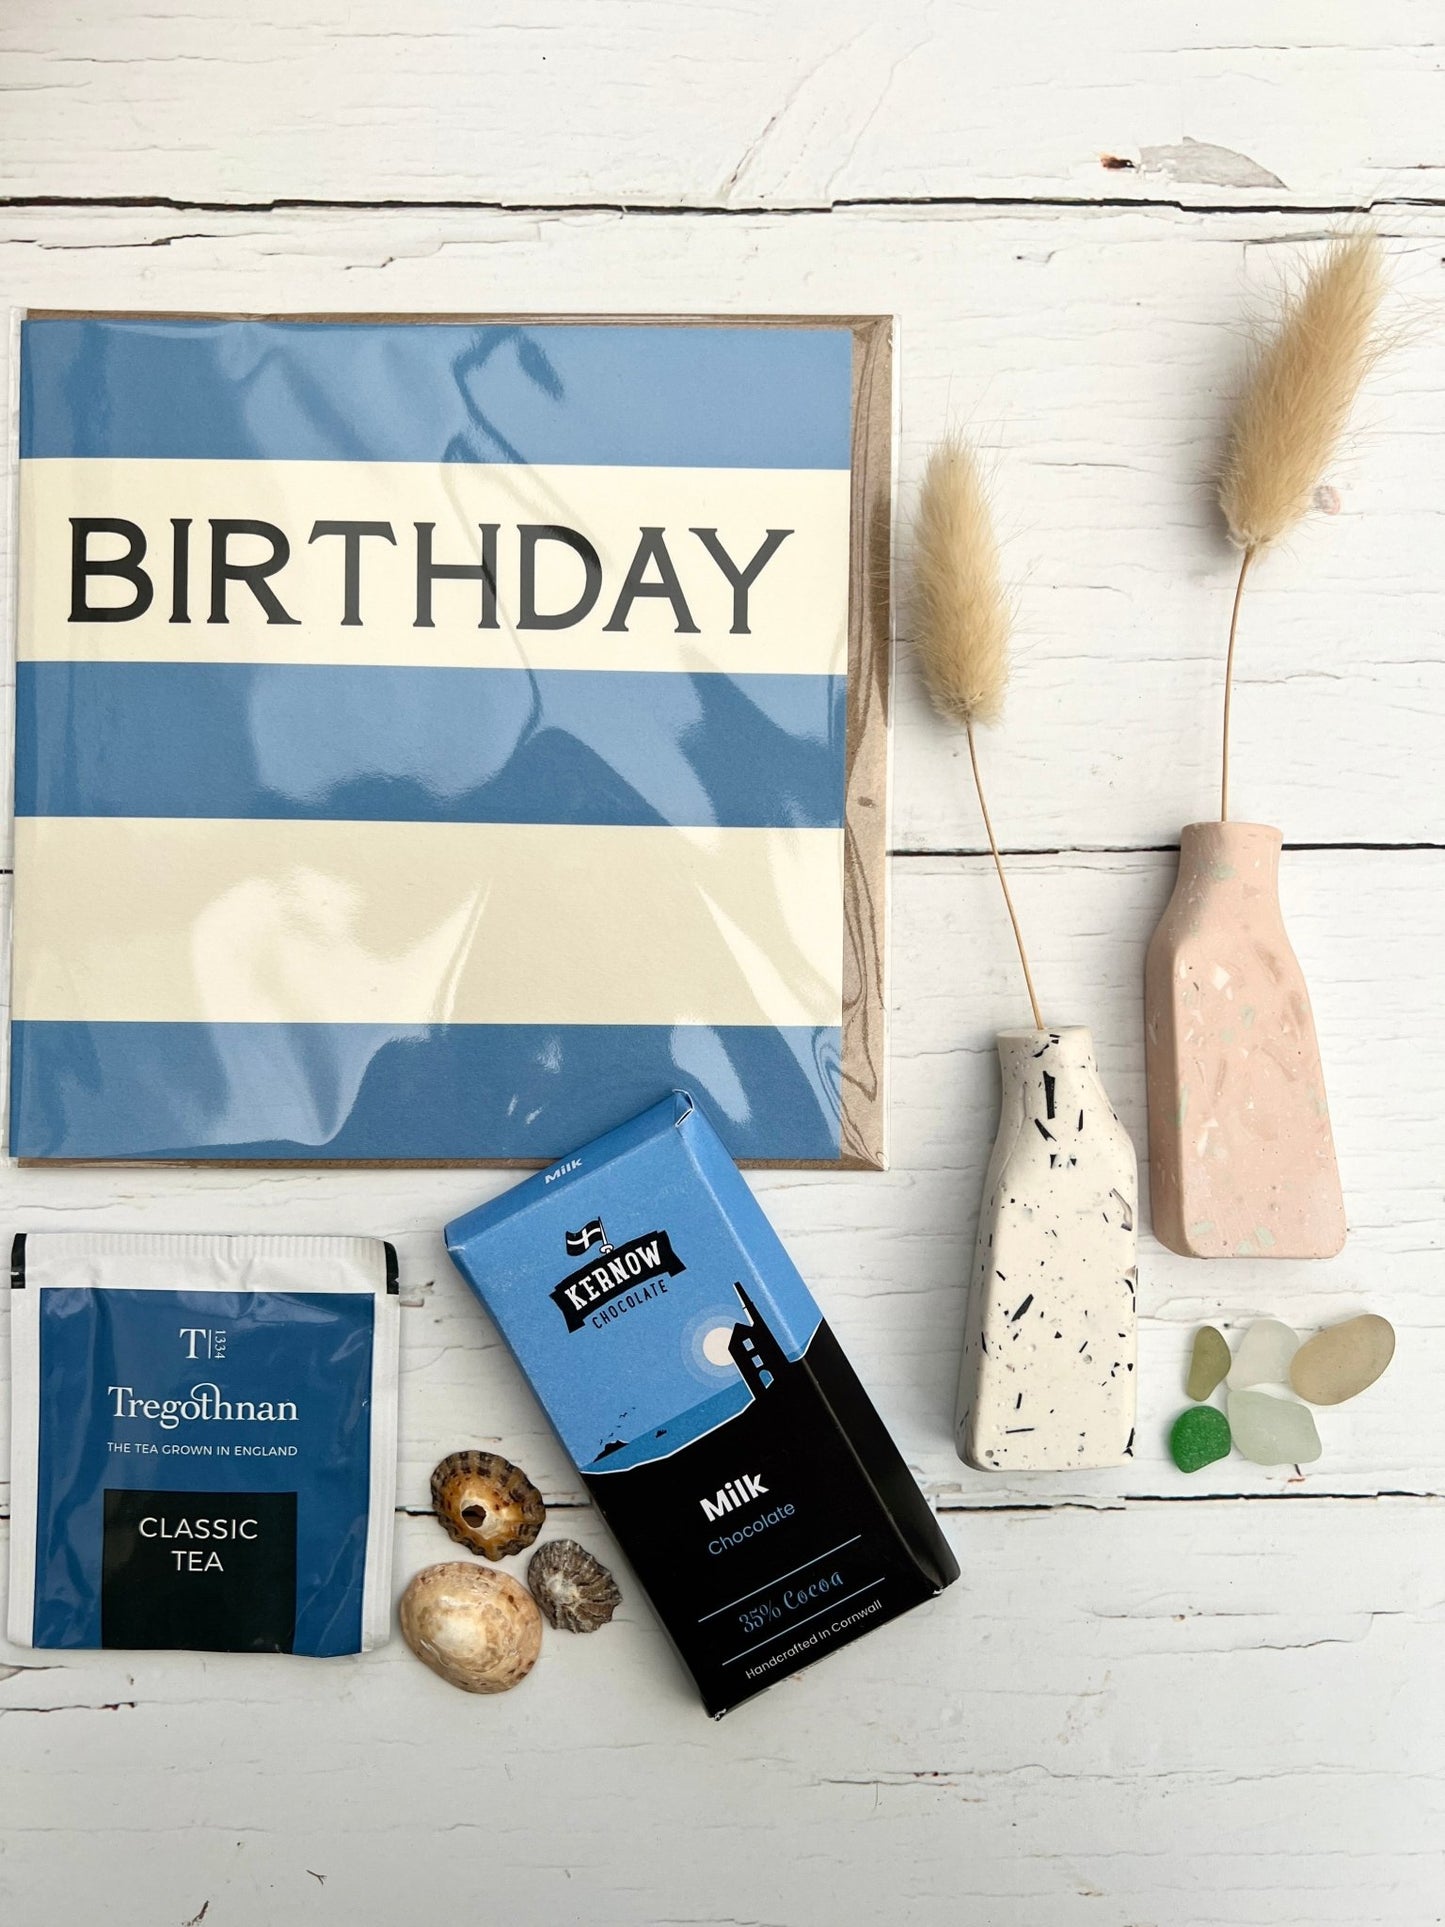 Mini Birthday Gift Box, from Cornwall with love - Readymoney Beach Shop